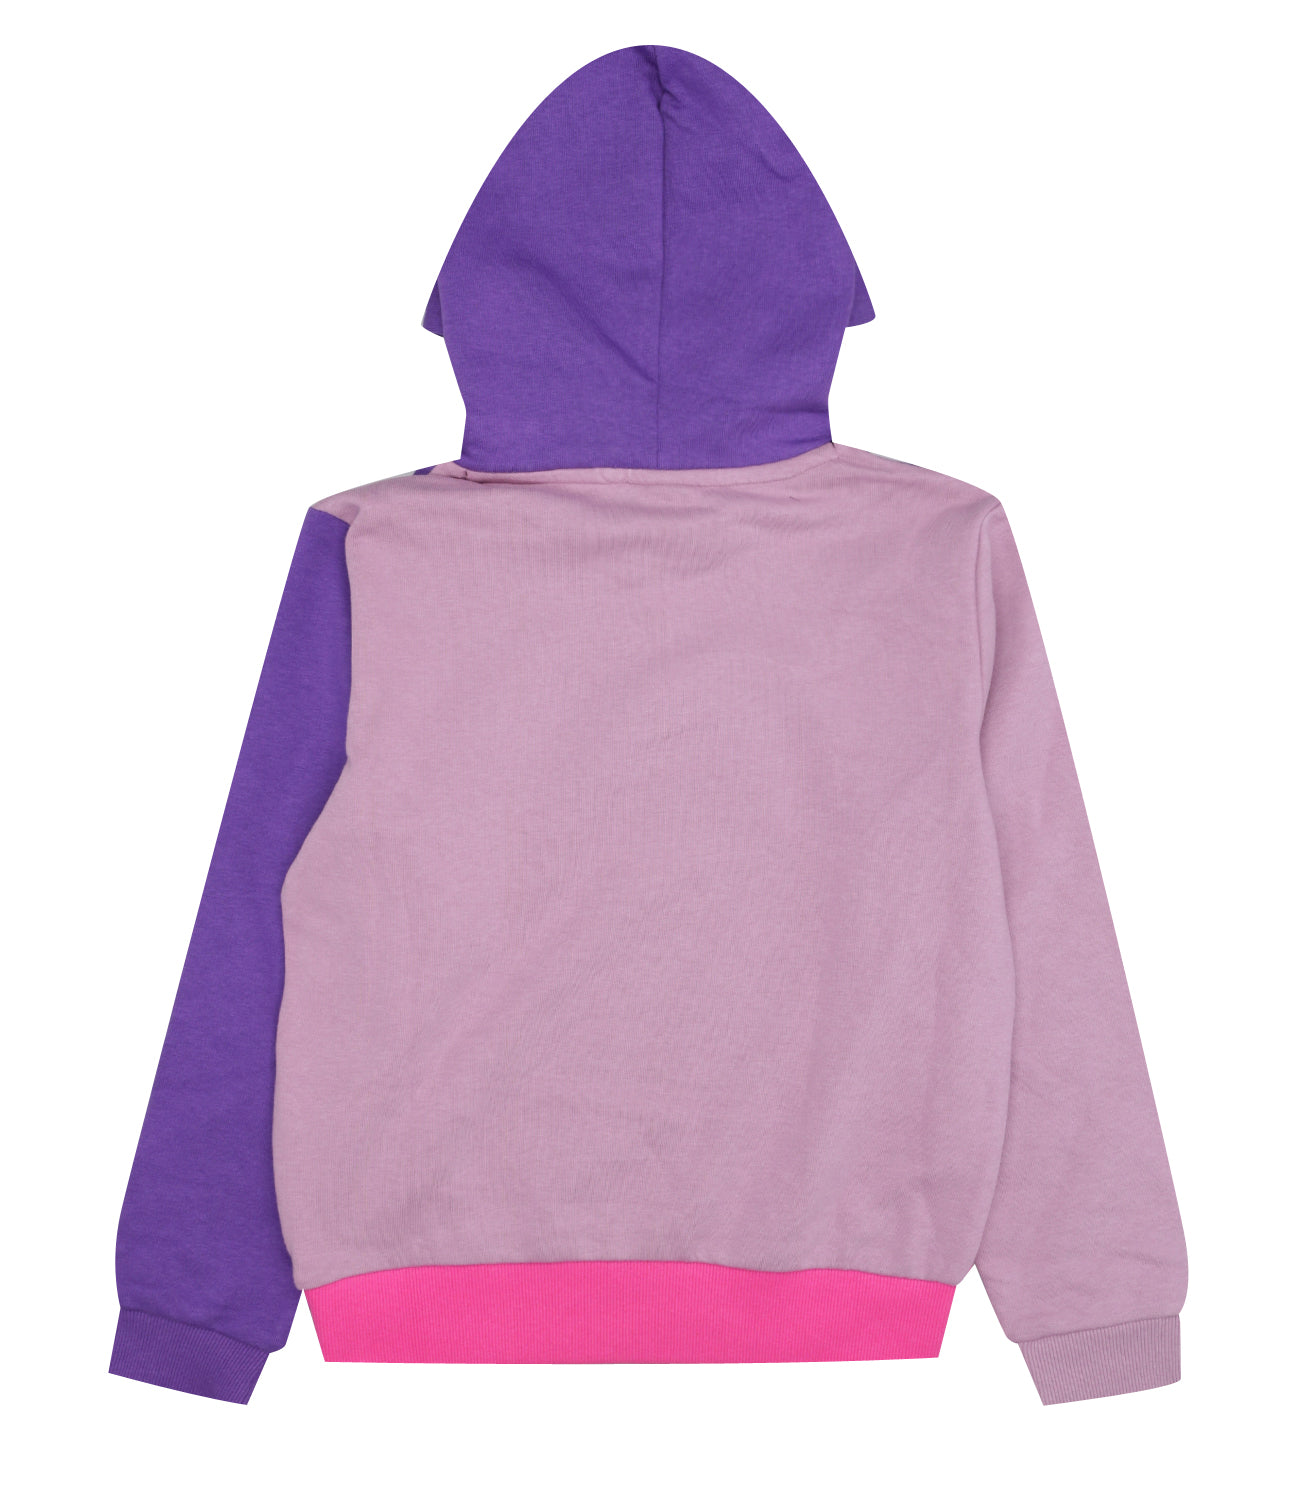 Fila Kids | Sweatshirt Purple and Lilac